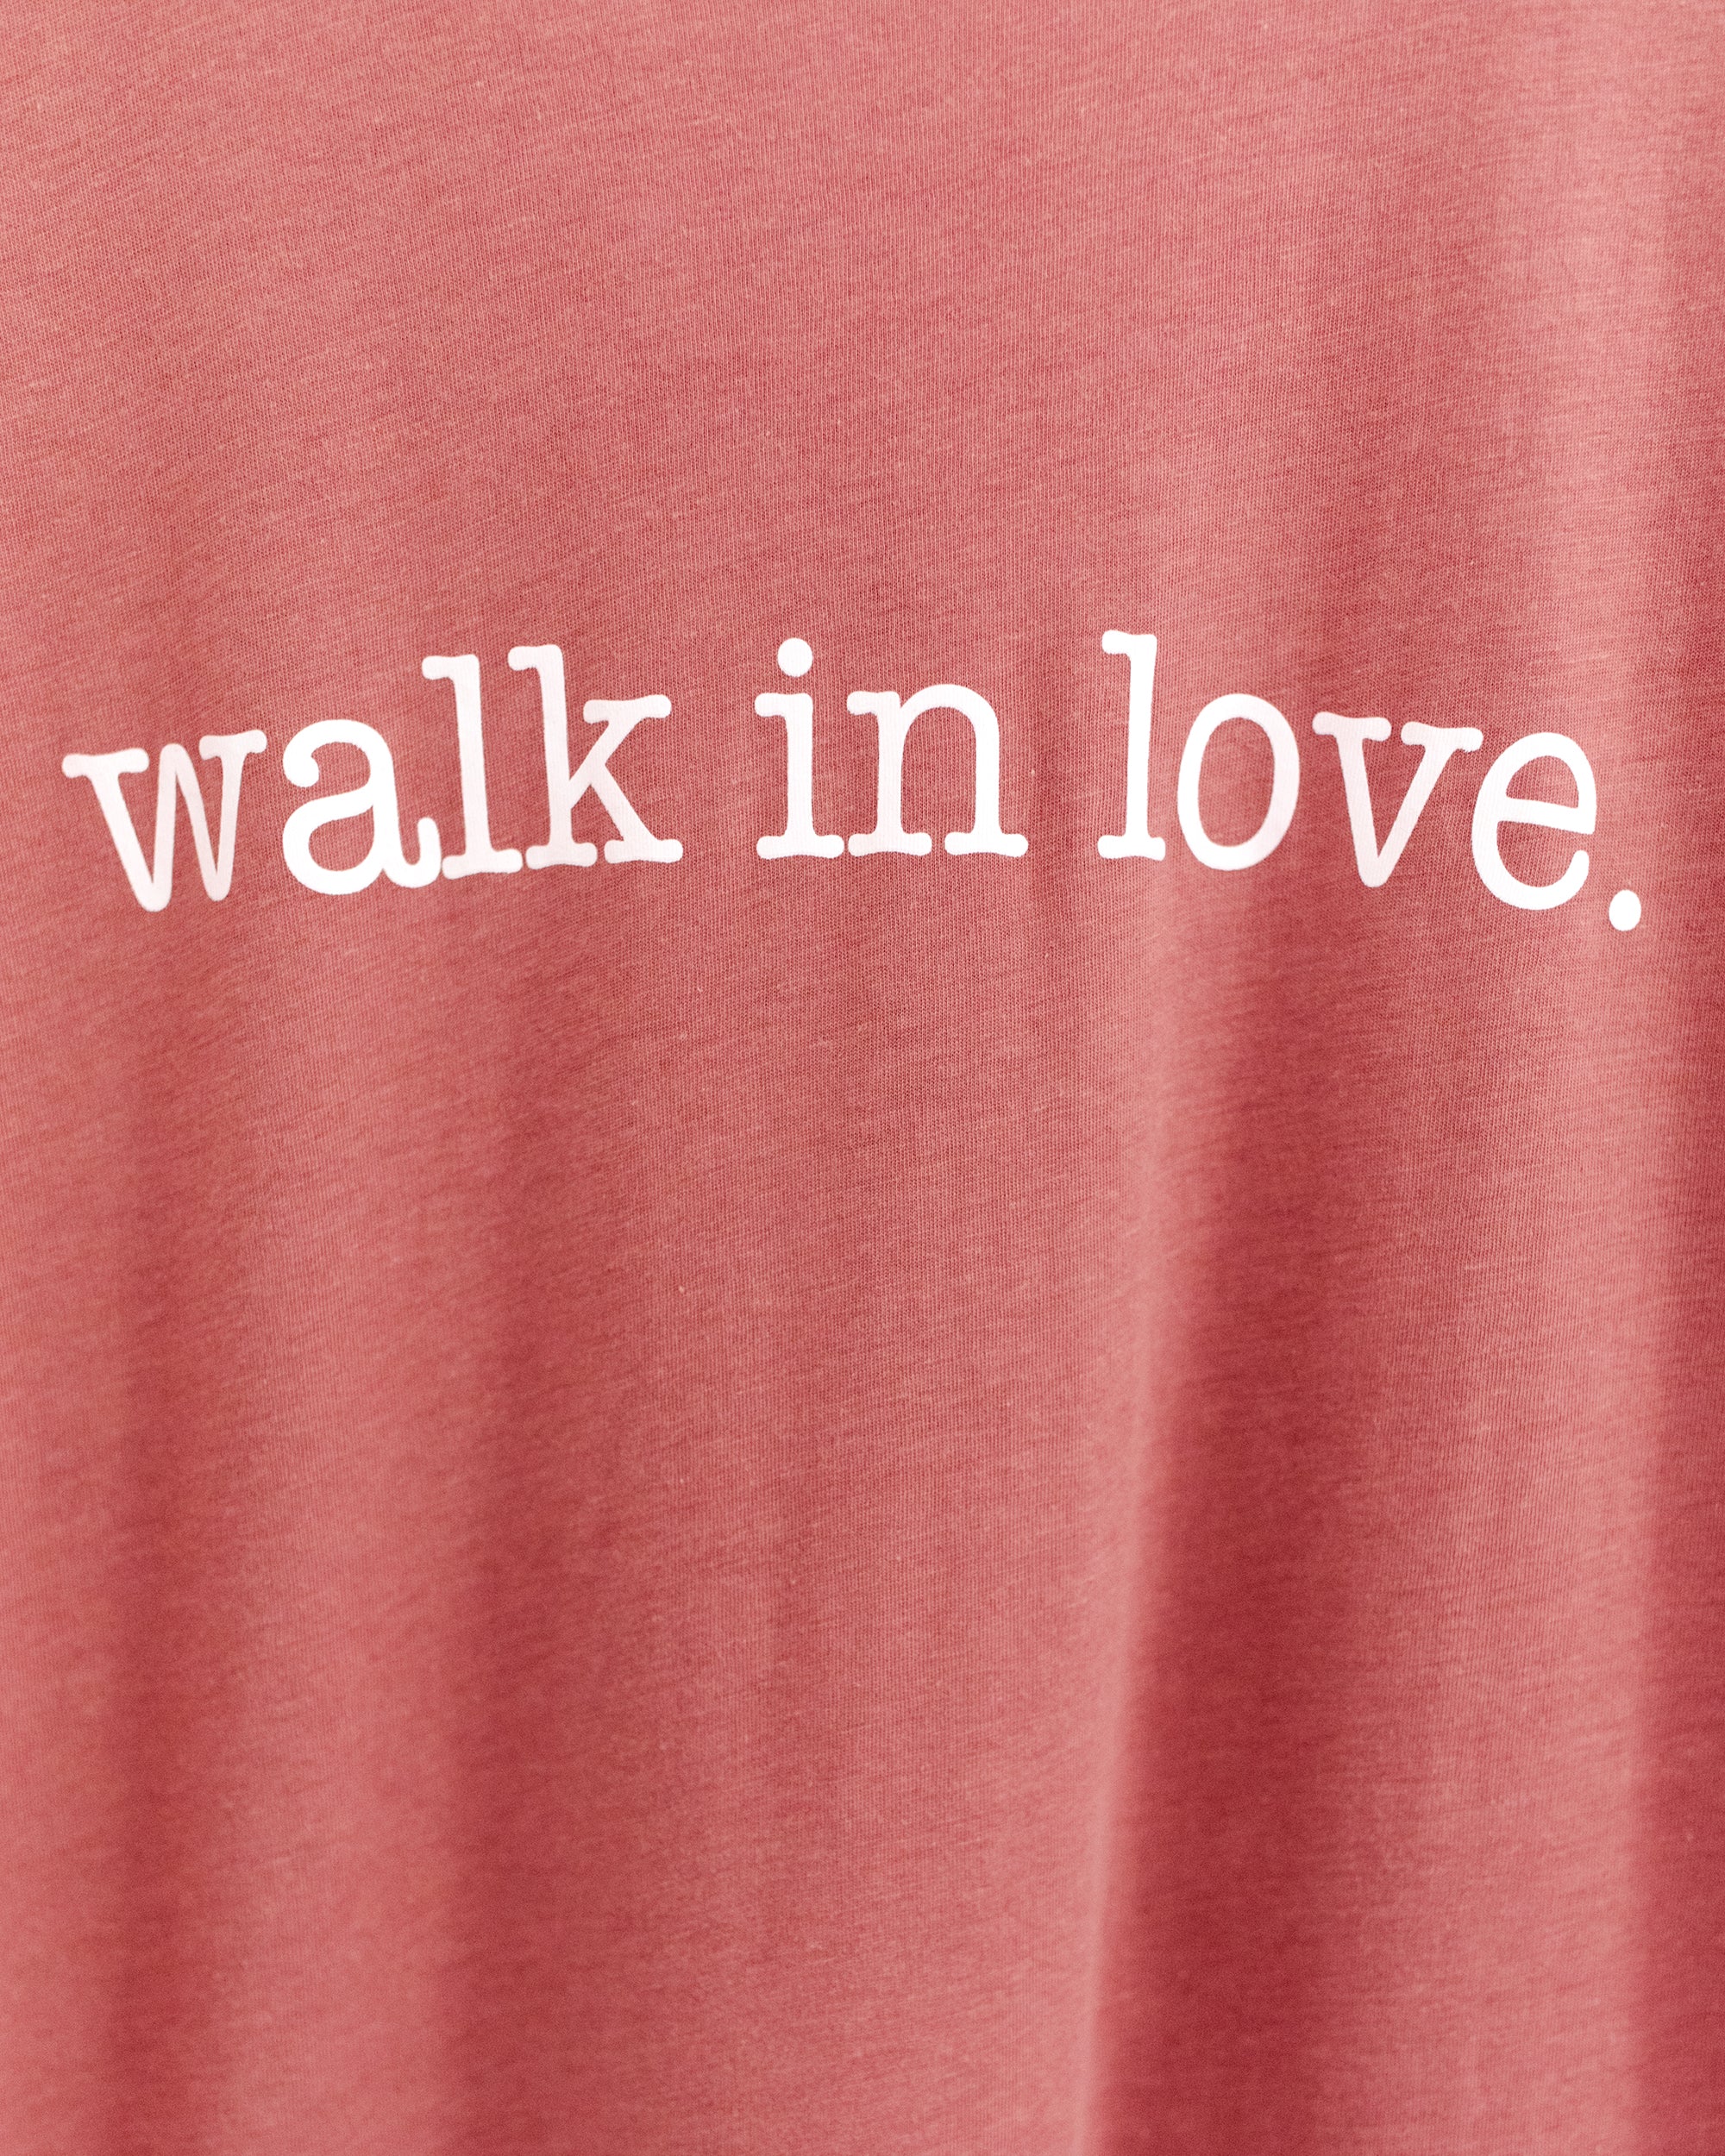 walk in love. Original Dusty Rose Tee